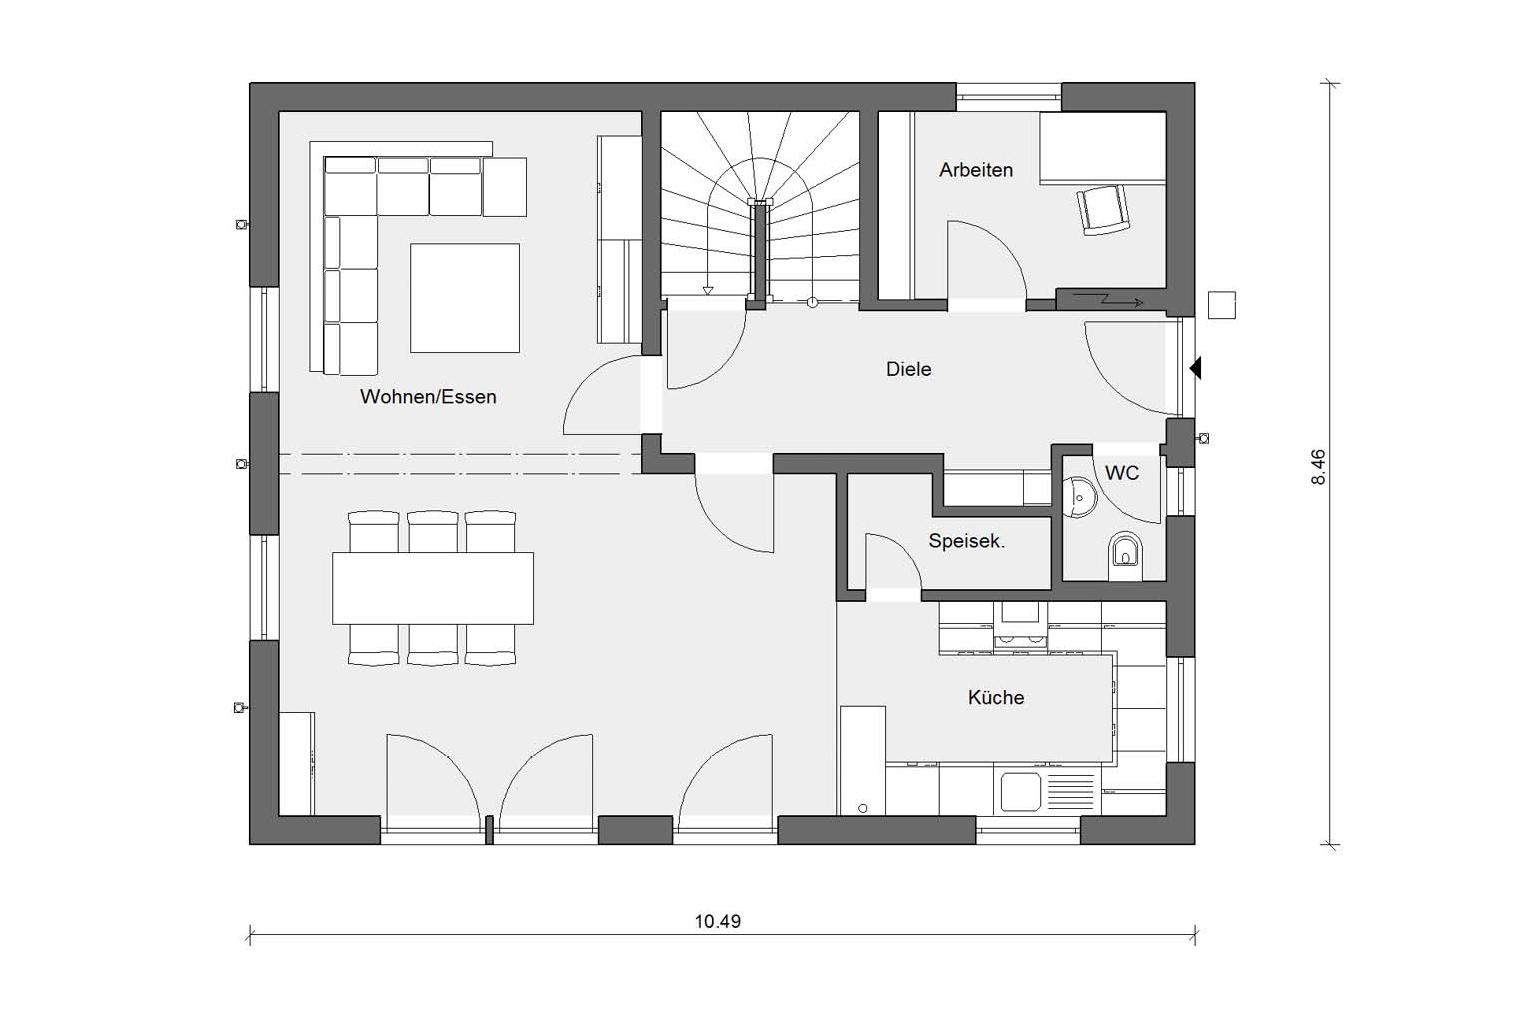 Floor plan ground floor E 15-147.3 Detached house with terrace